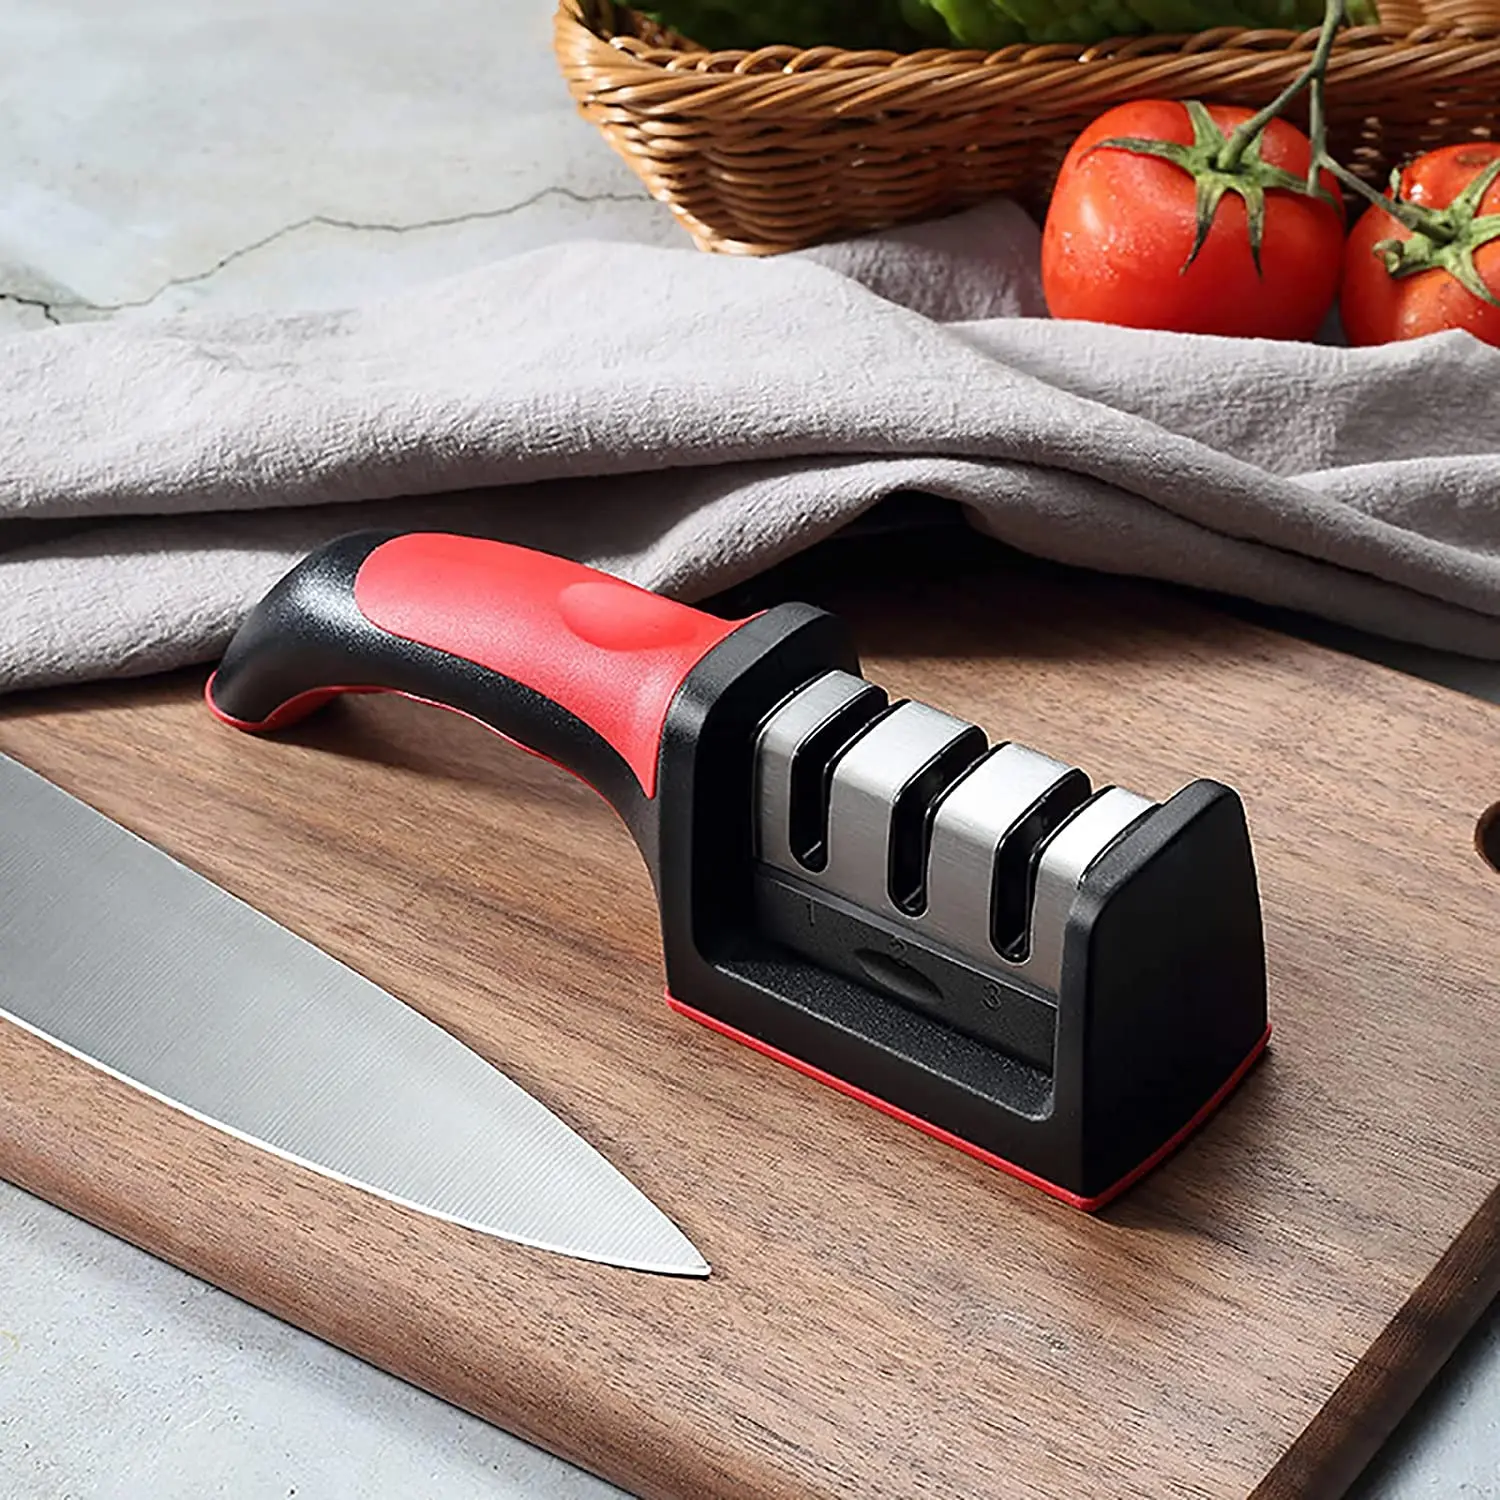 https://ae01.alicdn.com/kf/S423db21c4b454a57b4019a89f004b5f3m/3-Stage-Knife-Sharpener-Professional-Kitchen-Knife-Accessories-to-Repair-Restore-Polish-Blade-Pocket-Knife-Sharpening.jpg